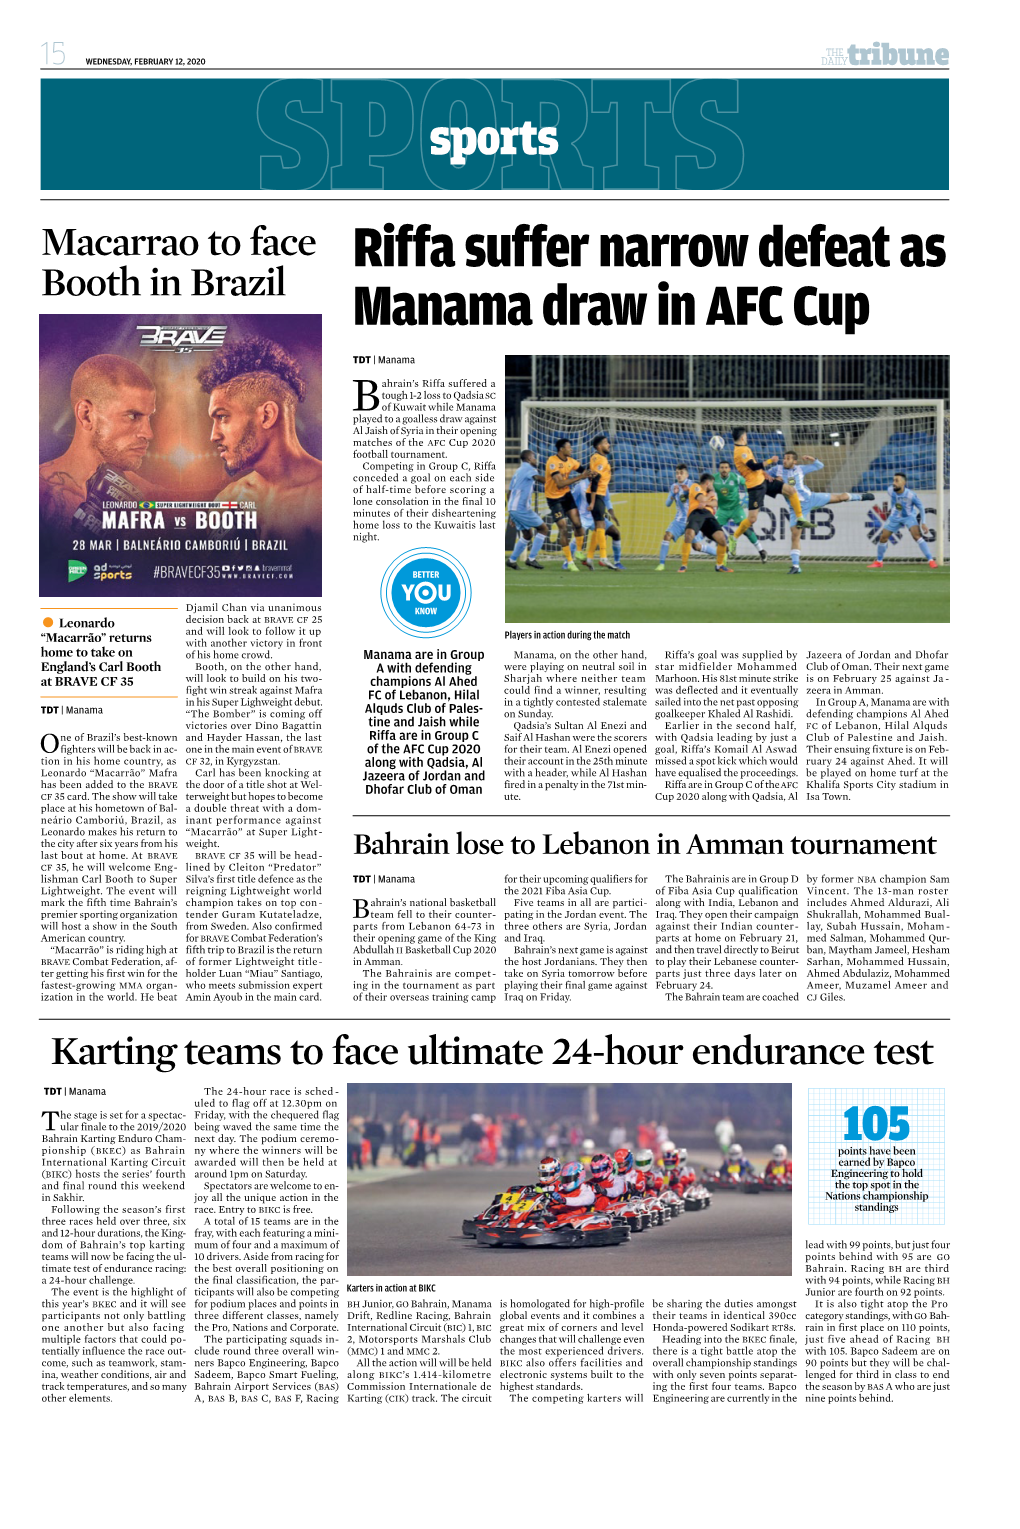 Riffa Suffer Narrow Defeat As Manama Draw in AFC